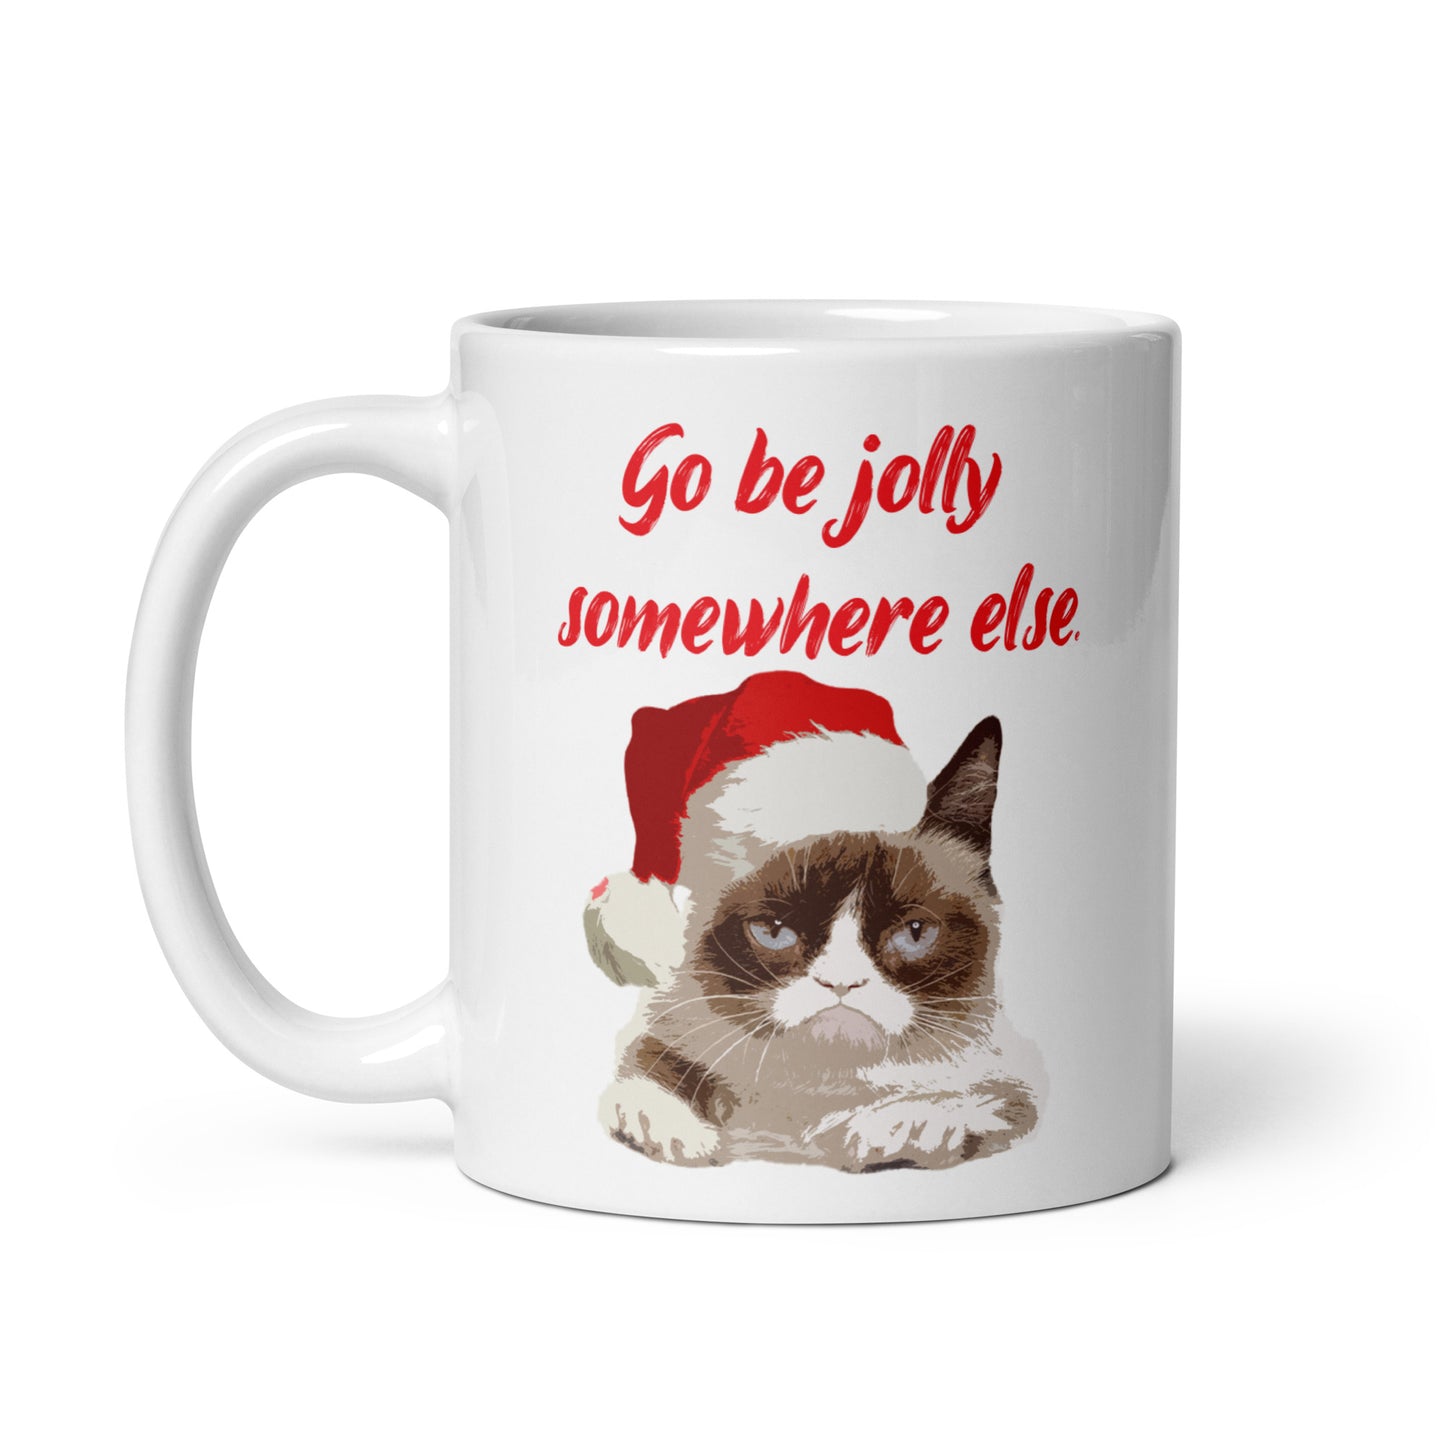 Grumpy cat - go be jolly somewhere else Mug